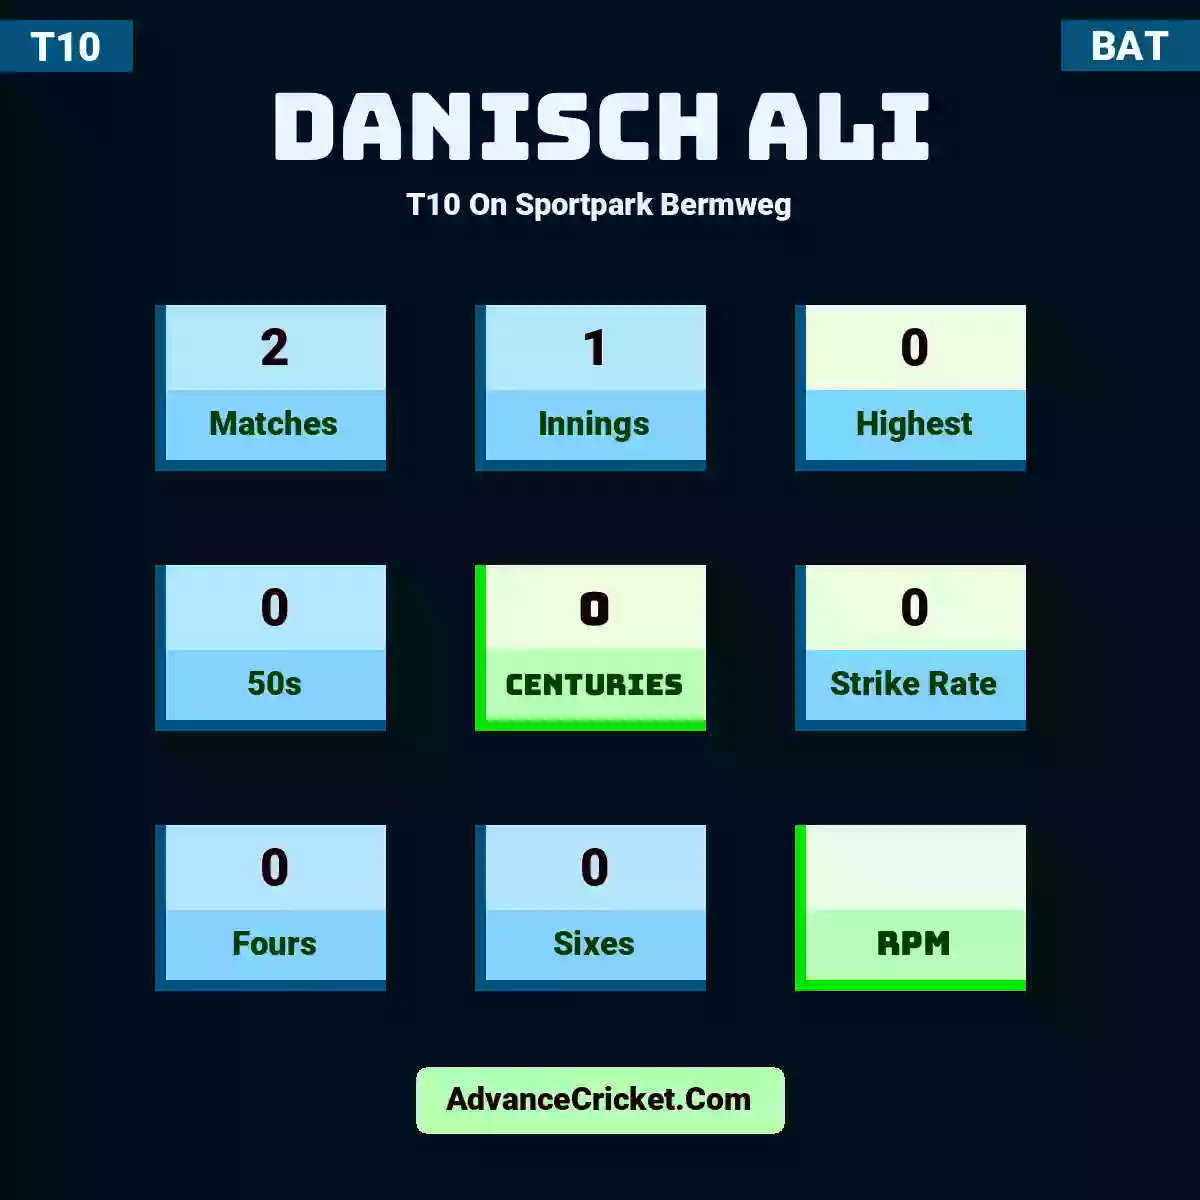 Danisch Ali T10  On Sportpark Bermweg, Danisch Ali played 2 matches, scored 0 runs as highest, 0 half-centuries, and 0 centuries, with a strike rate of 0. D.Ali hit 0 fours and 0 sixes.